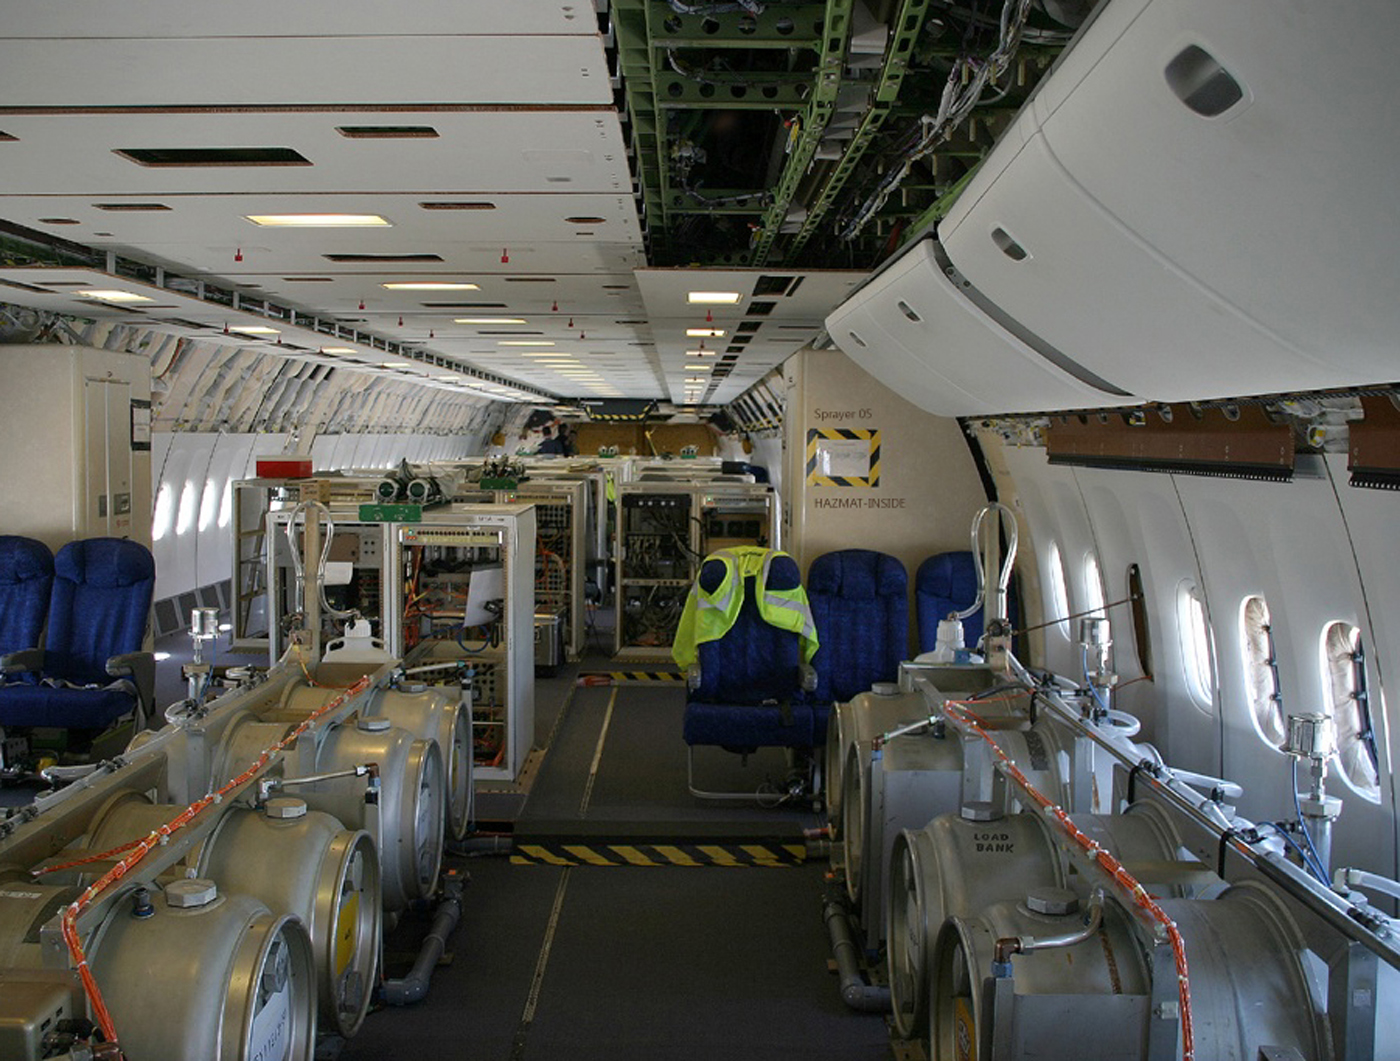 Interior view of sprayer plane